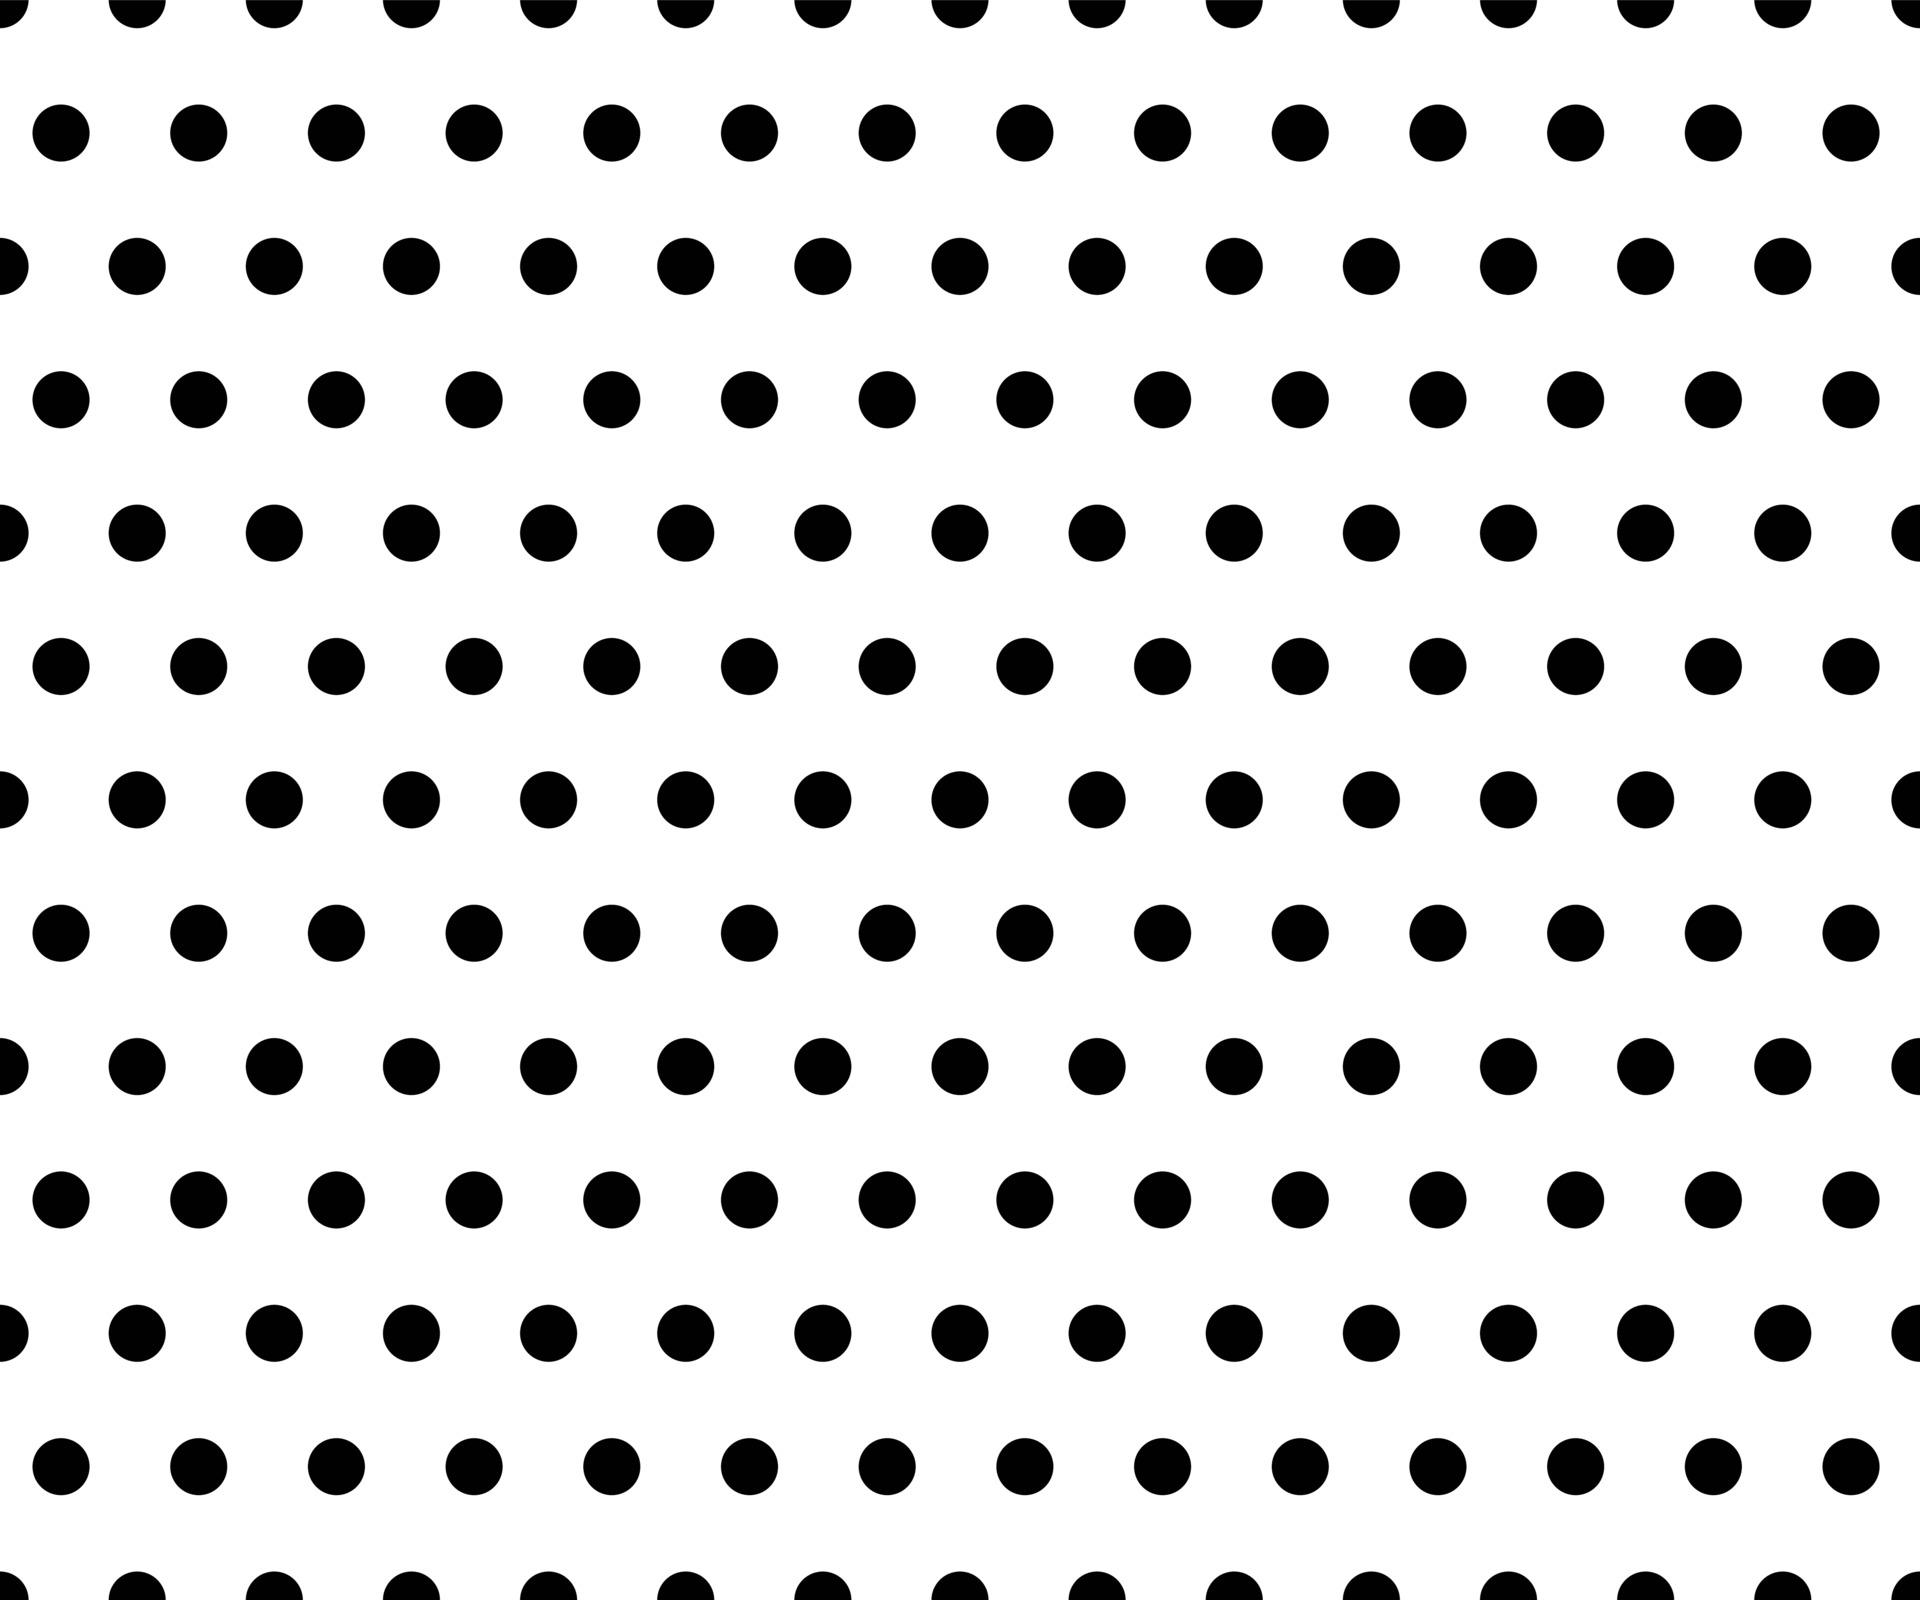 5. White and Black Polka Dot Nail Design for Short Nails - wide 8